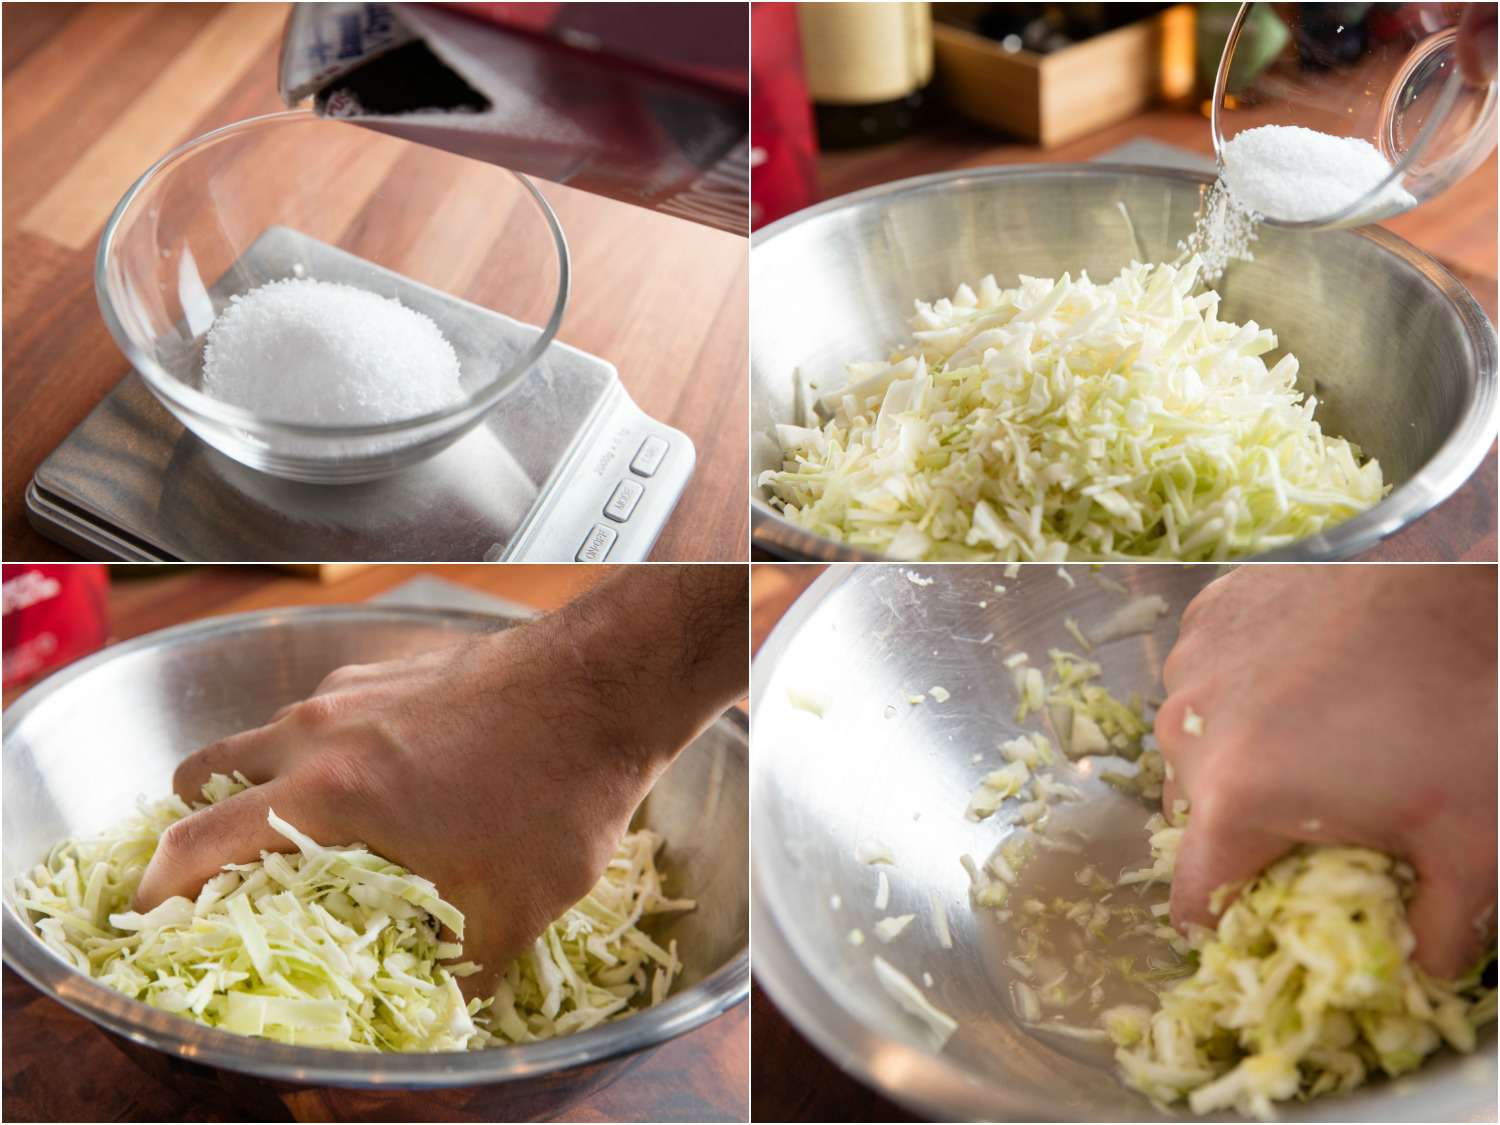 20161212-sauerkraut-vicky-wasik-1-salting-cabbage.jpg